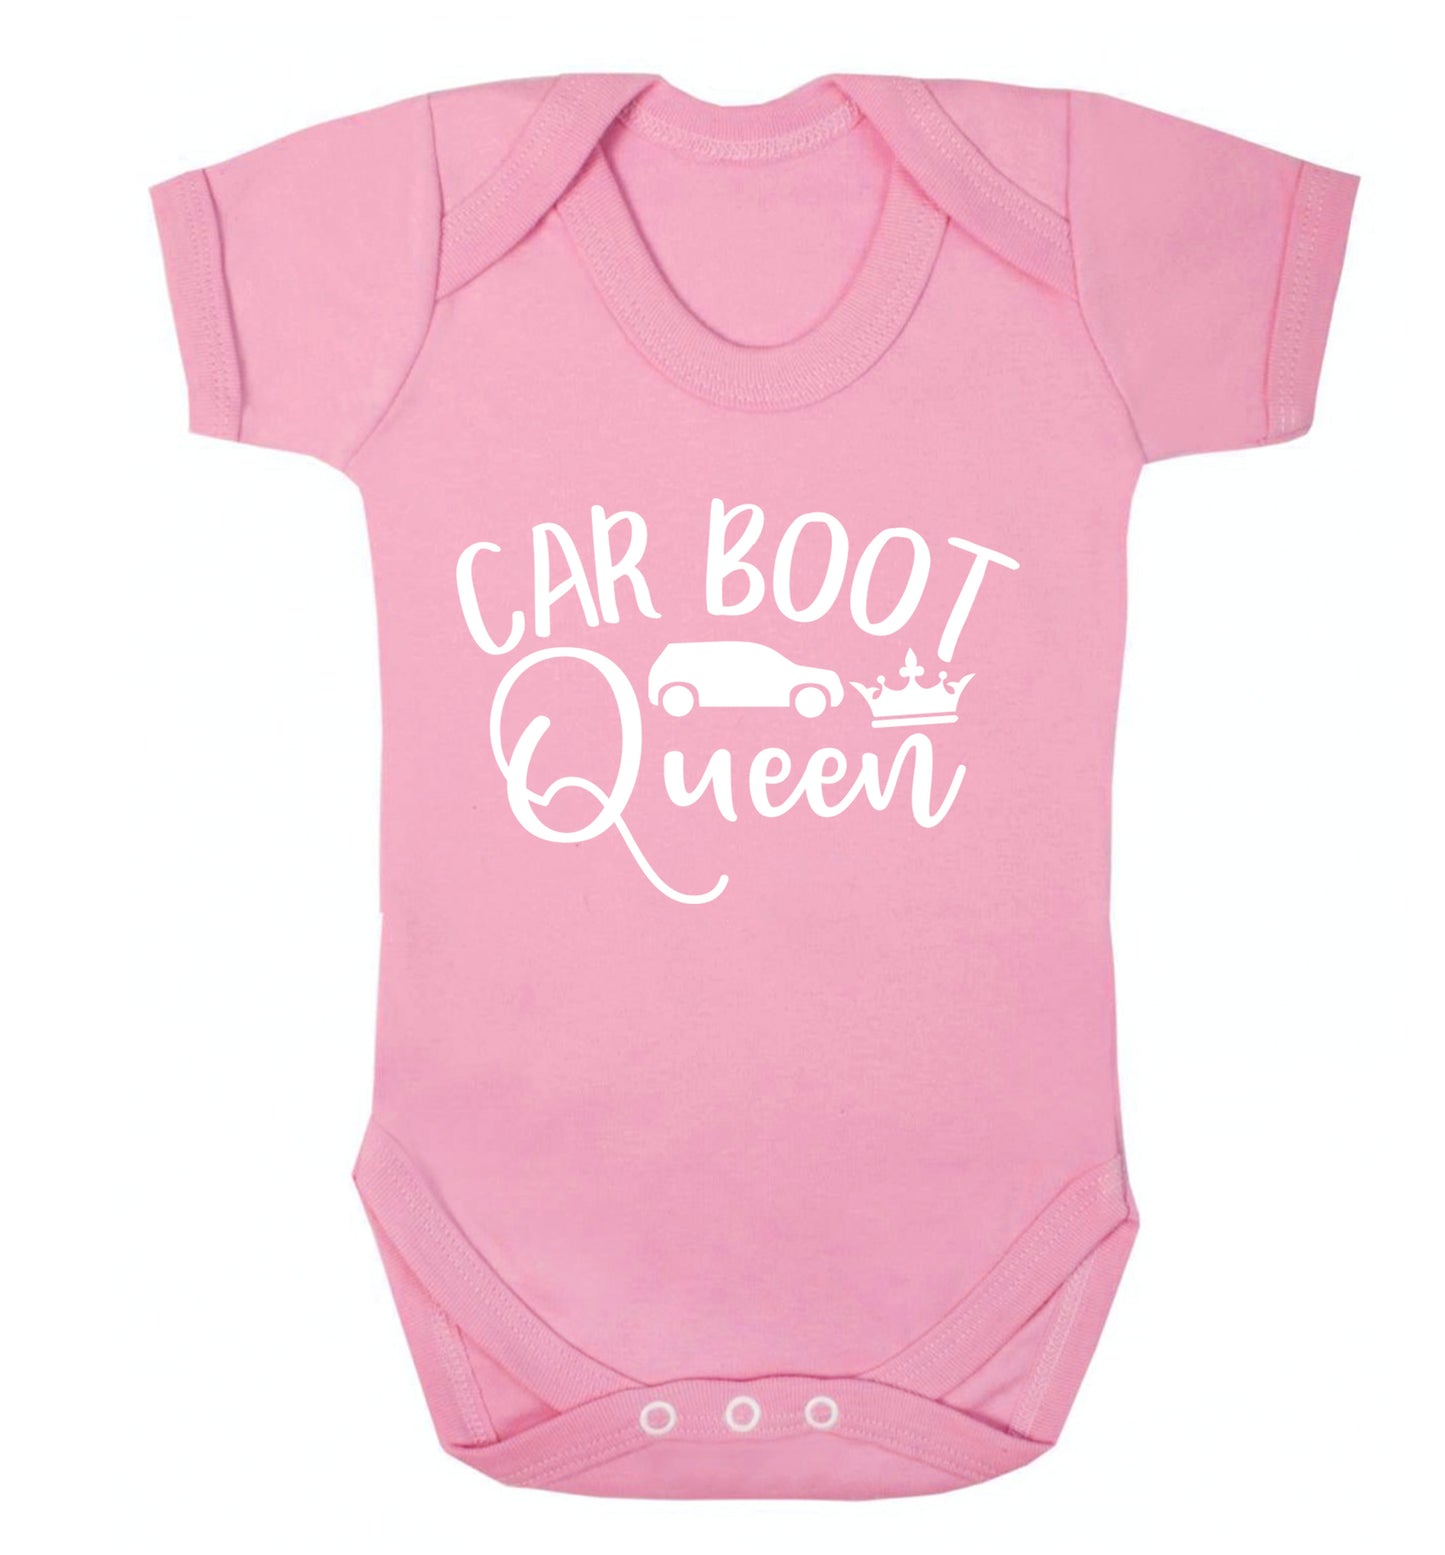 Carboot Queen Baby Vest pale pink 18-24 months